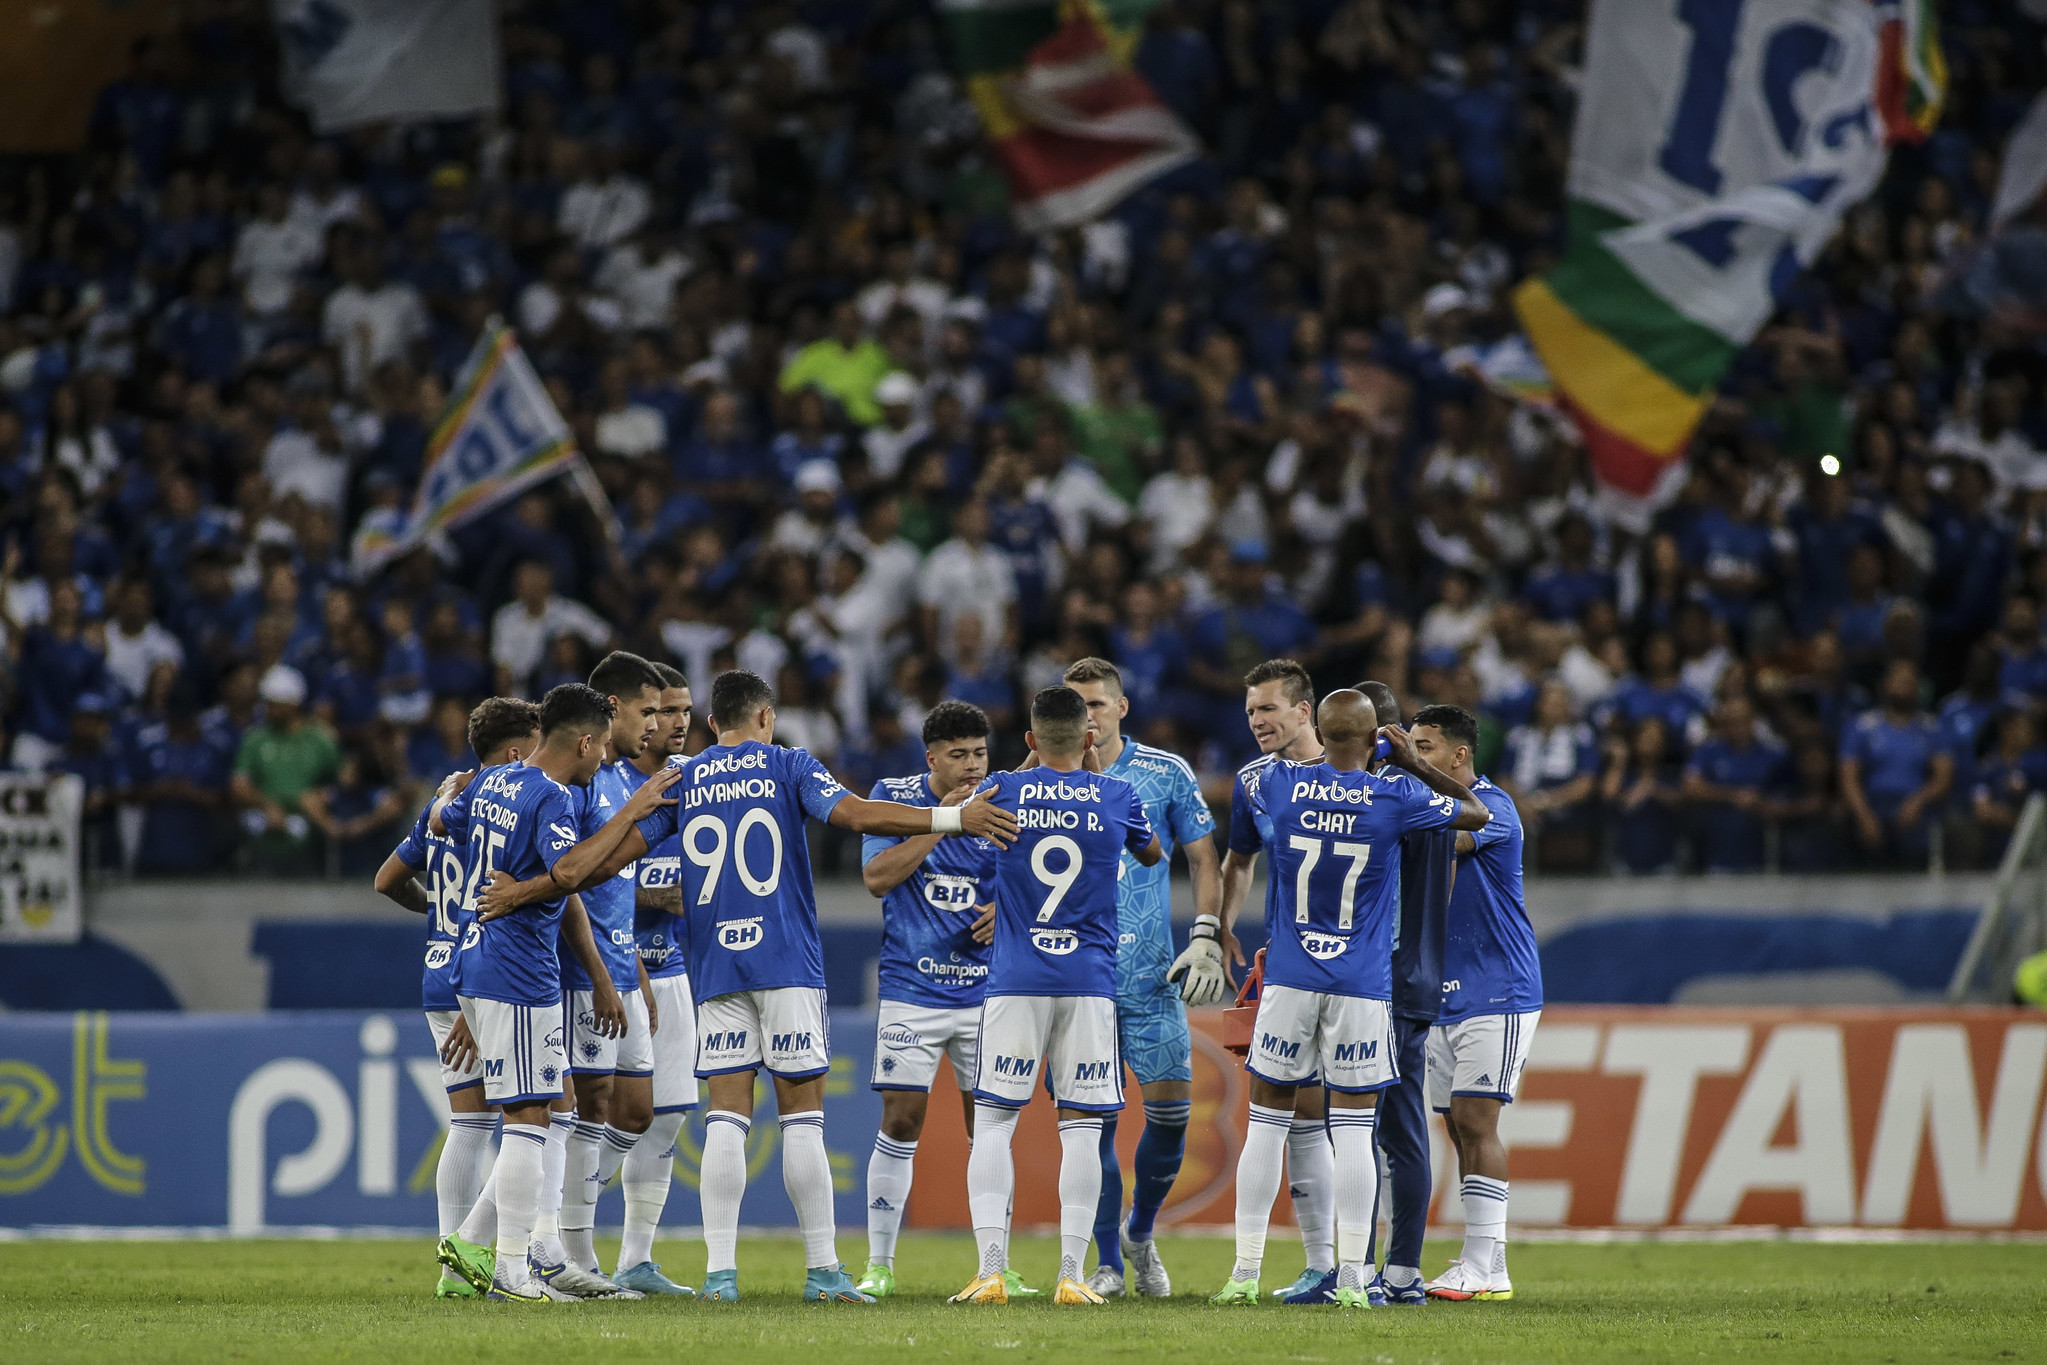 Foto: Staff Images / Cruzeiro
